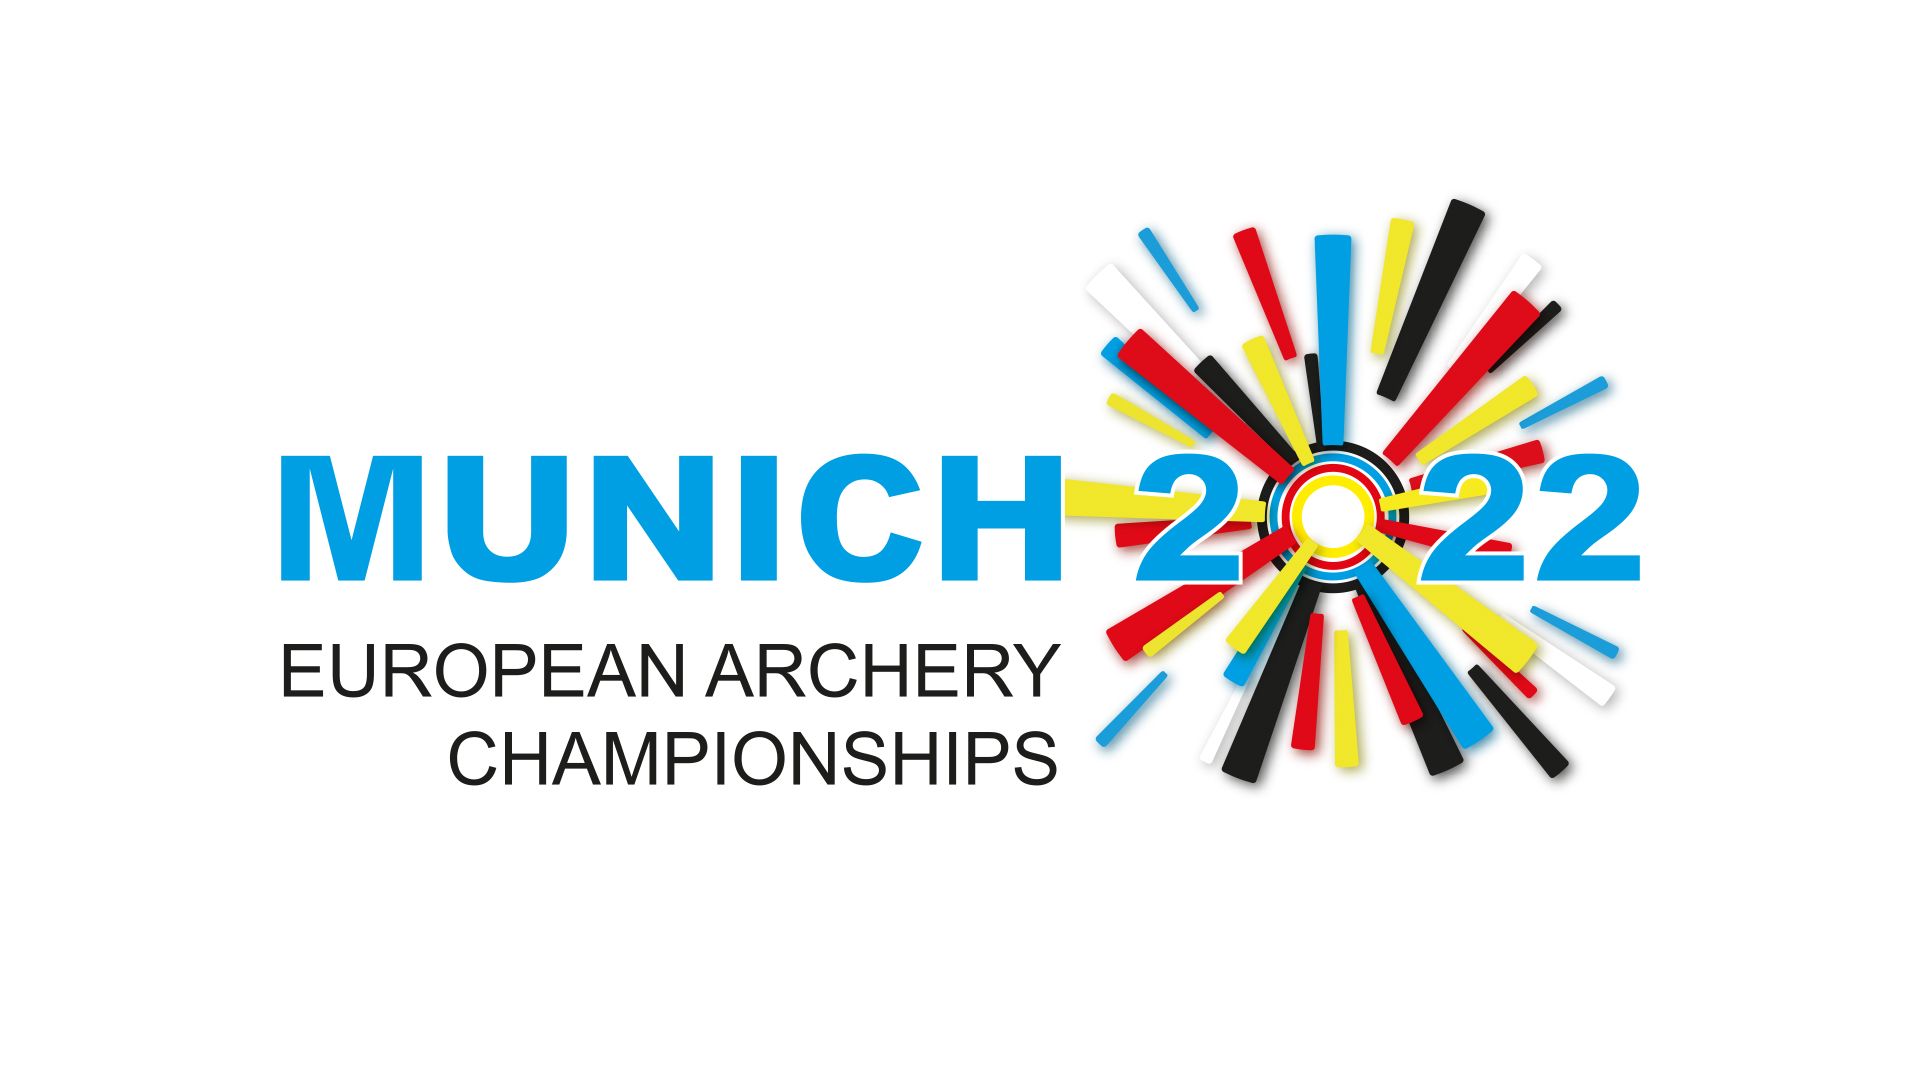 European Archery Championships 2022